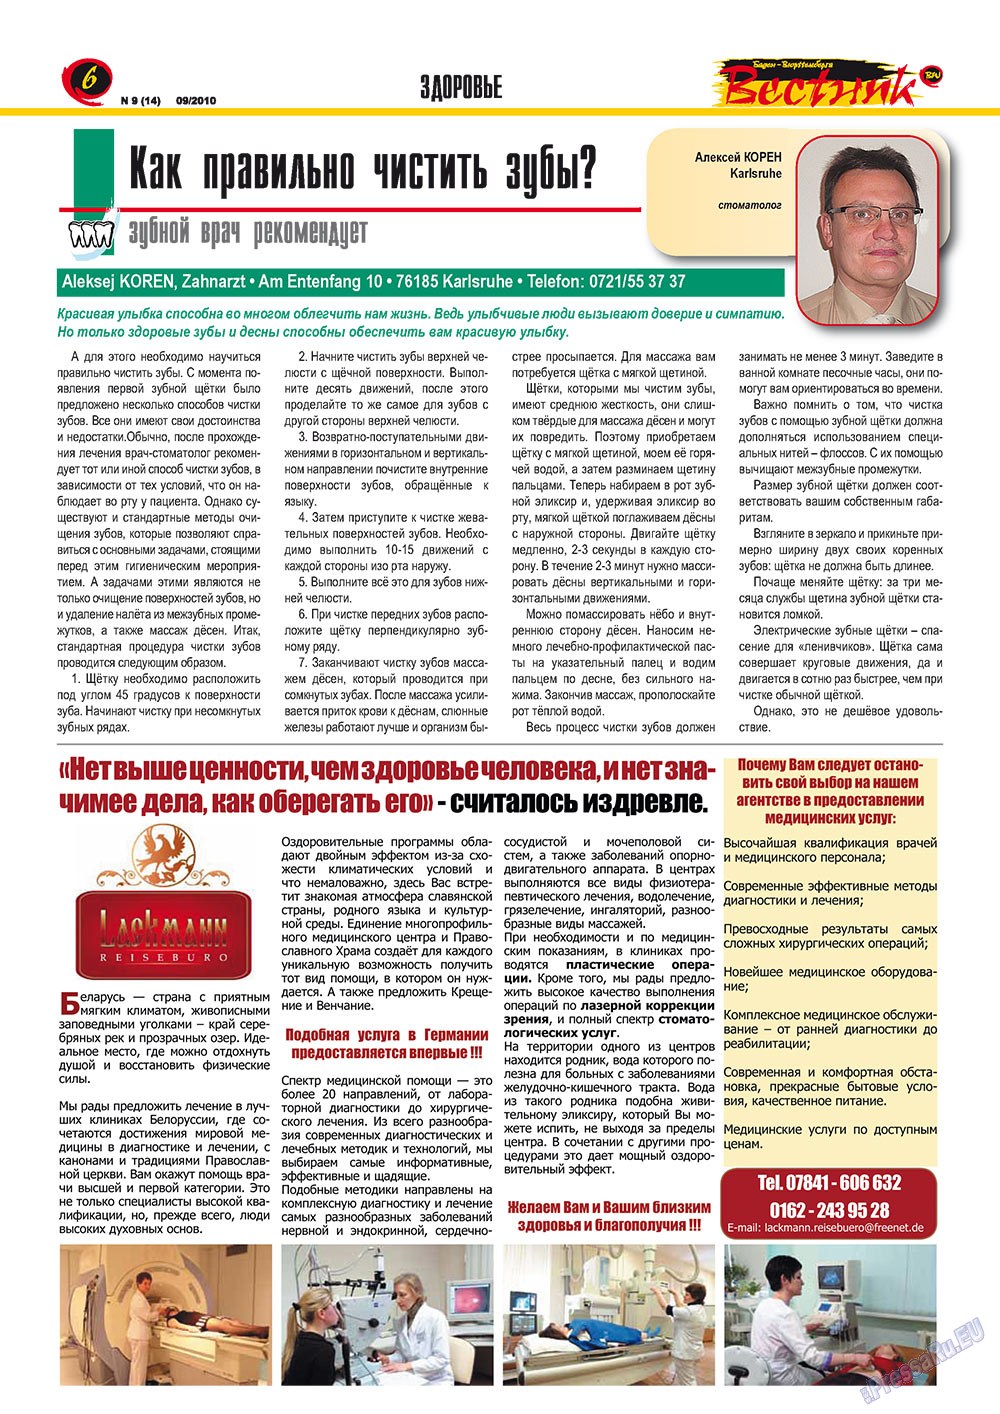 Вестник-info (журнал). 2010 год, номер 9, стр. 6